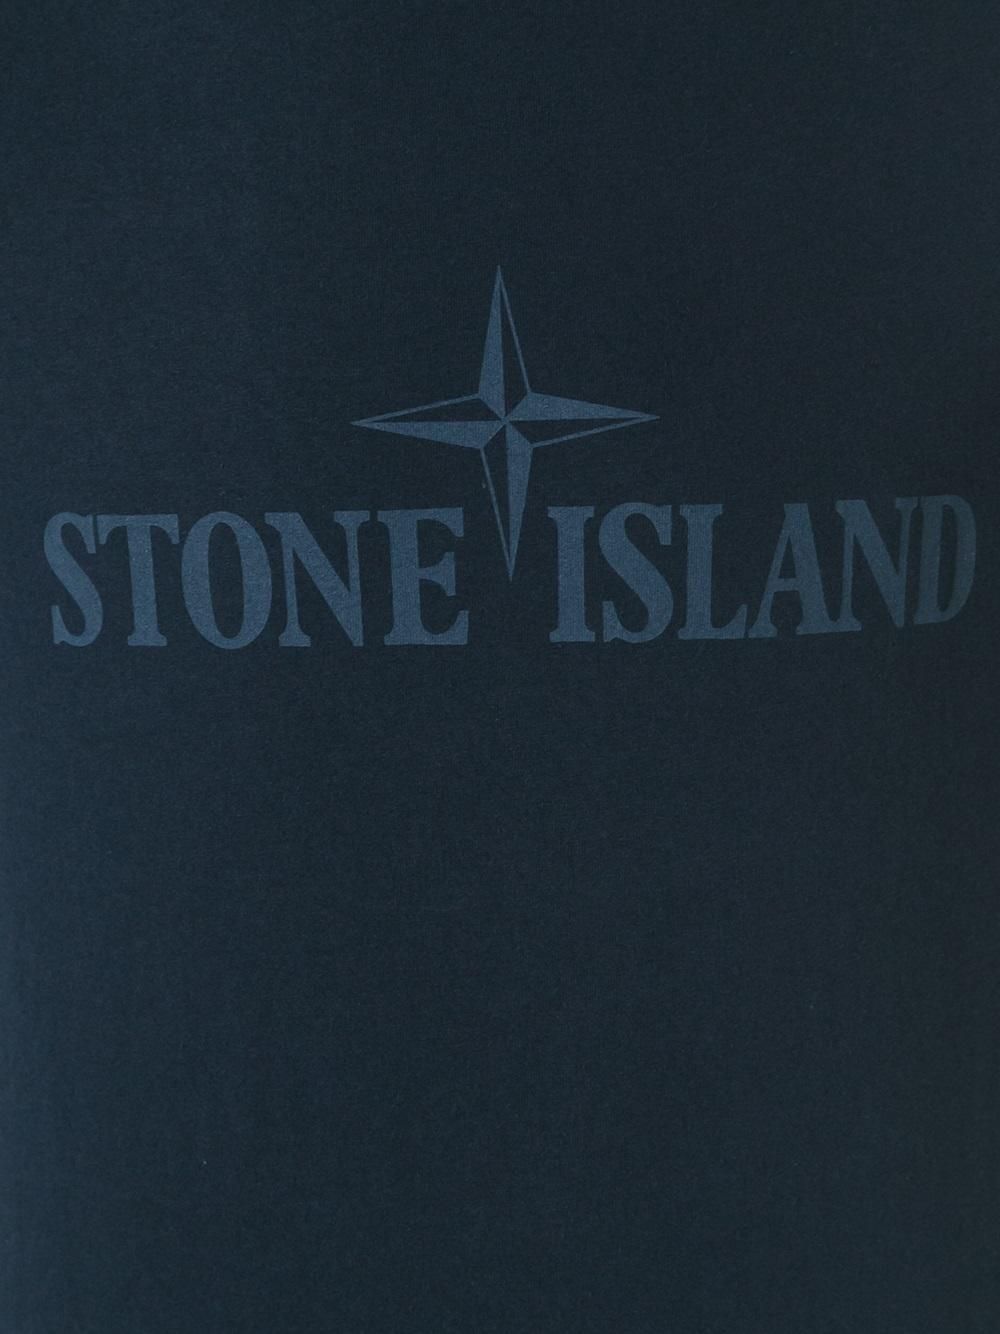 stone island wallpaper. Обои, Обои для iphone